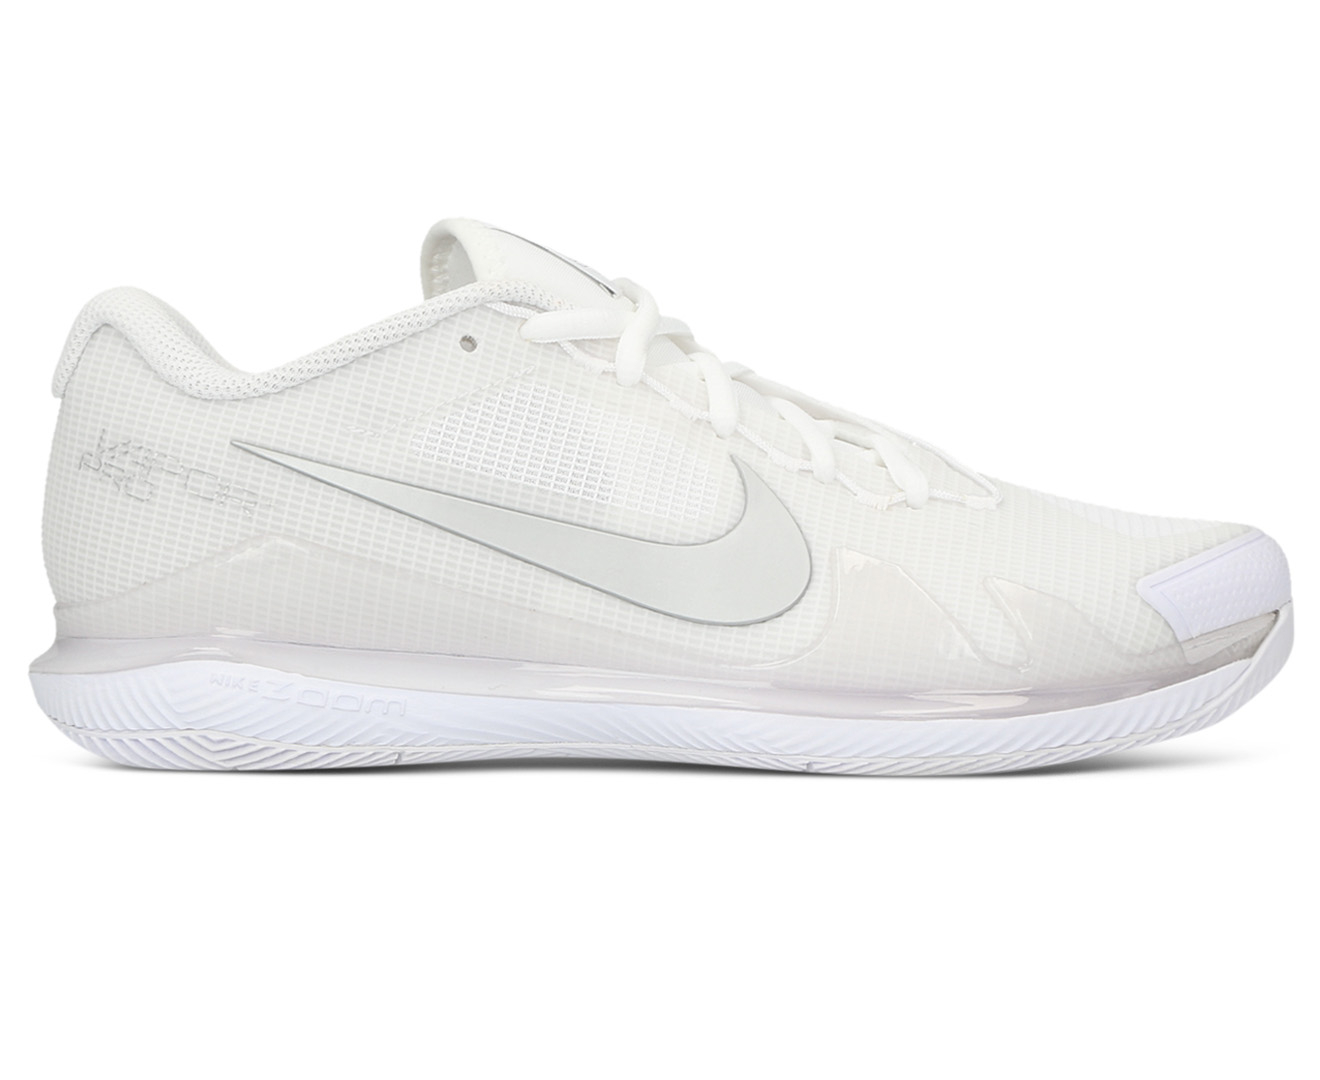 Nike Women's Air Zoom Vapor Pro Hard Court Tennis Shoes - White ...